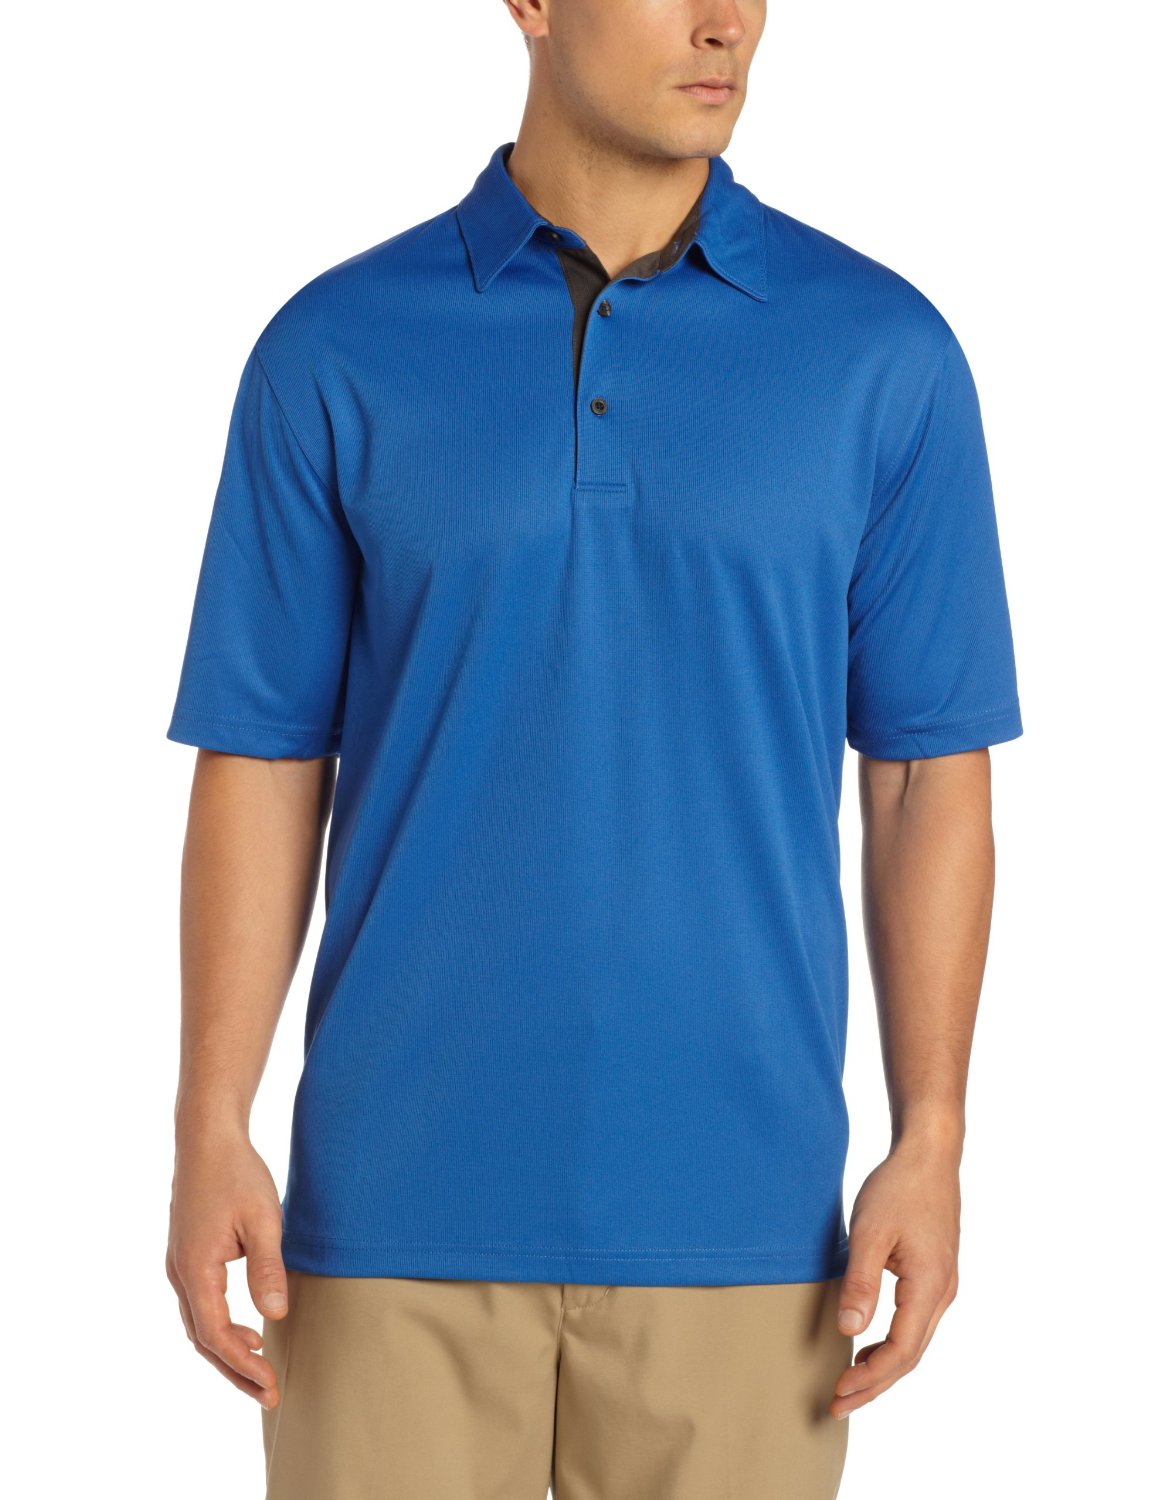 Mens Greg Norman SorbTek Honeycomb Solid Golf Polo Shirts